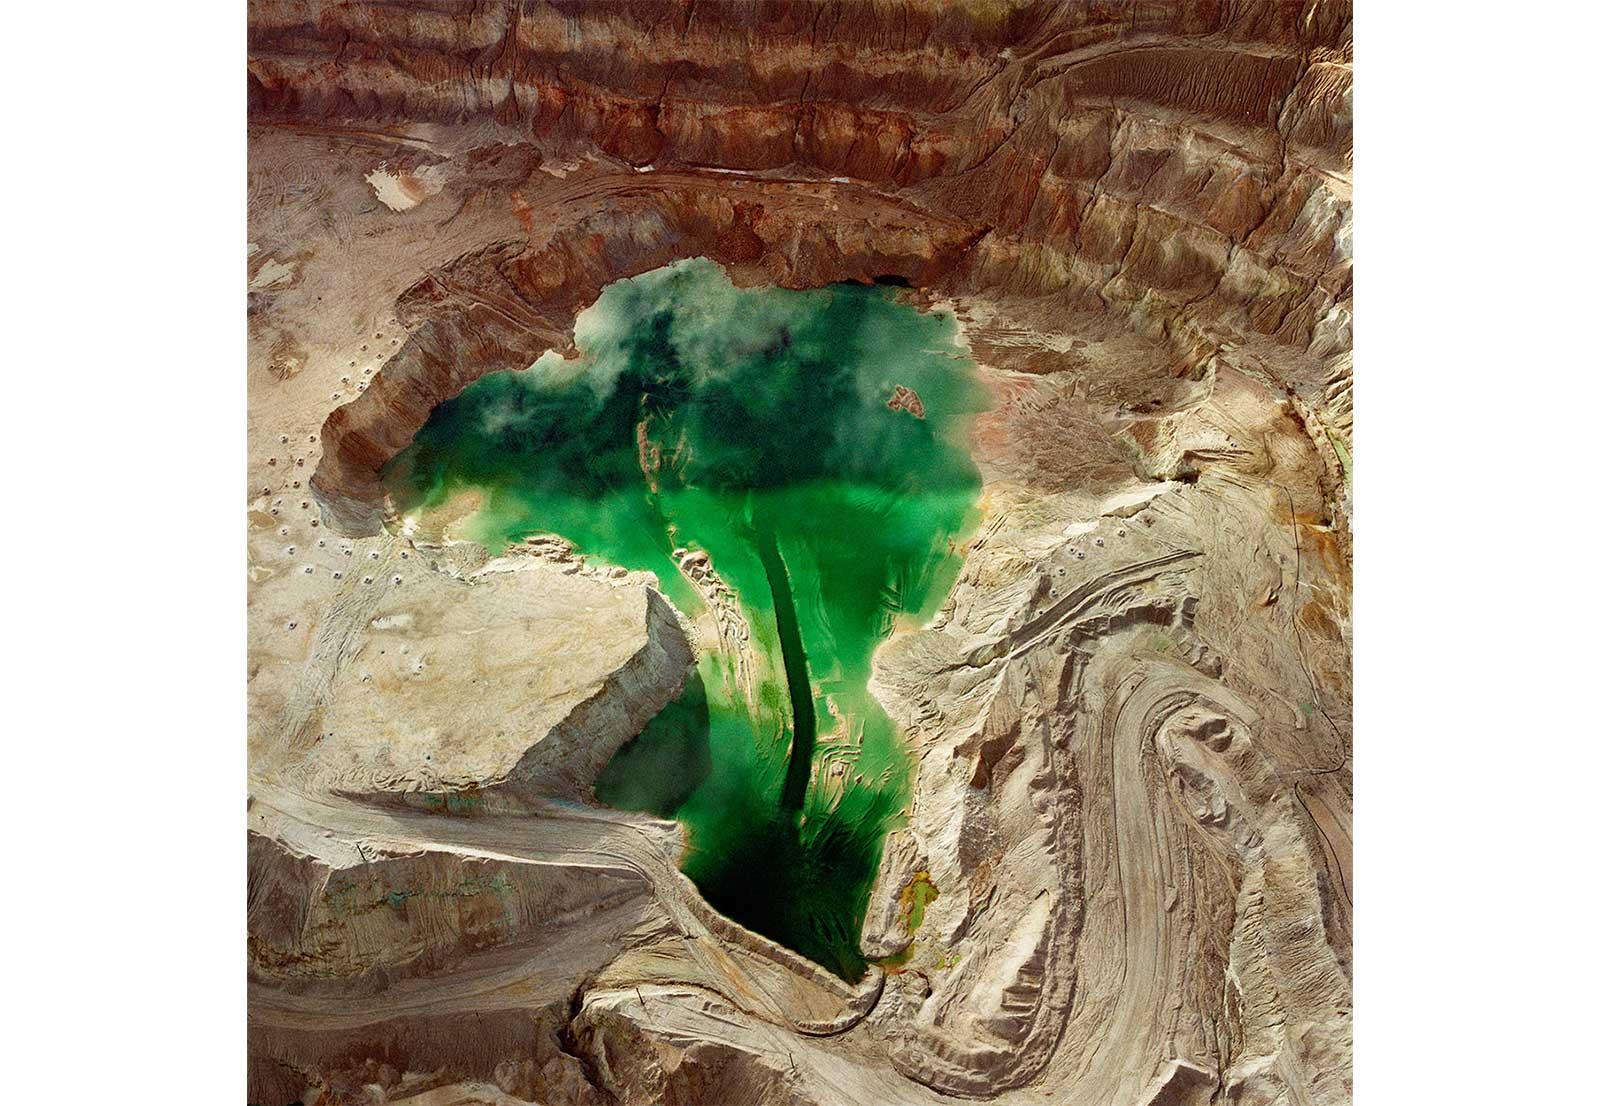 David Maisel, The Mining Project, Inspiration, Arizona 4, 1989.